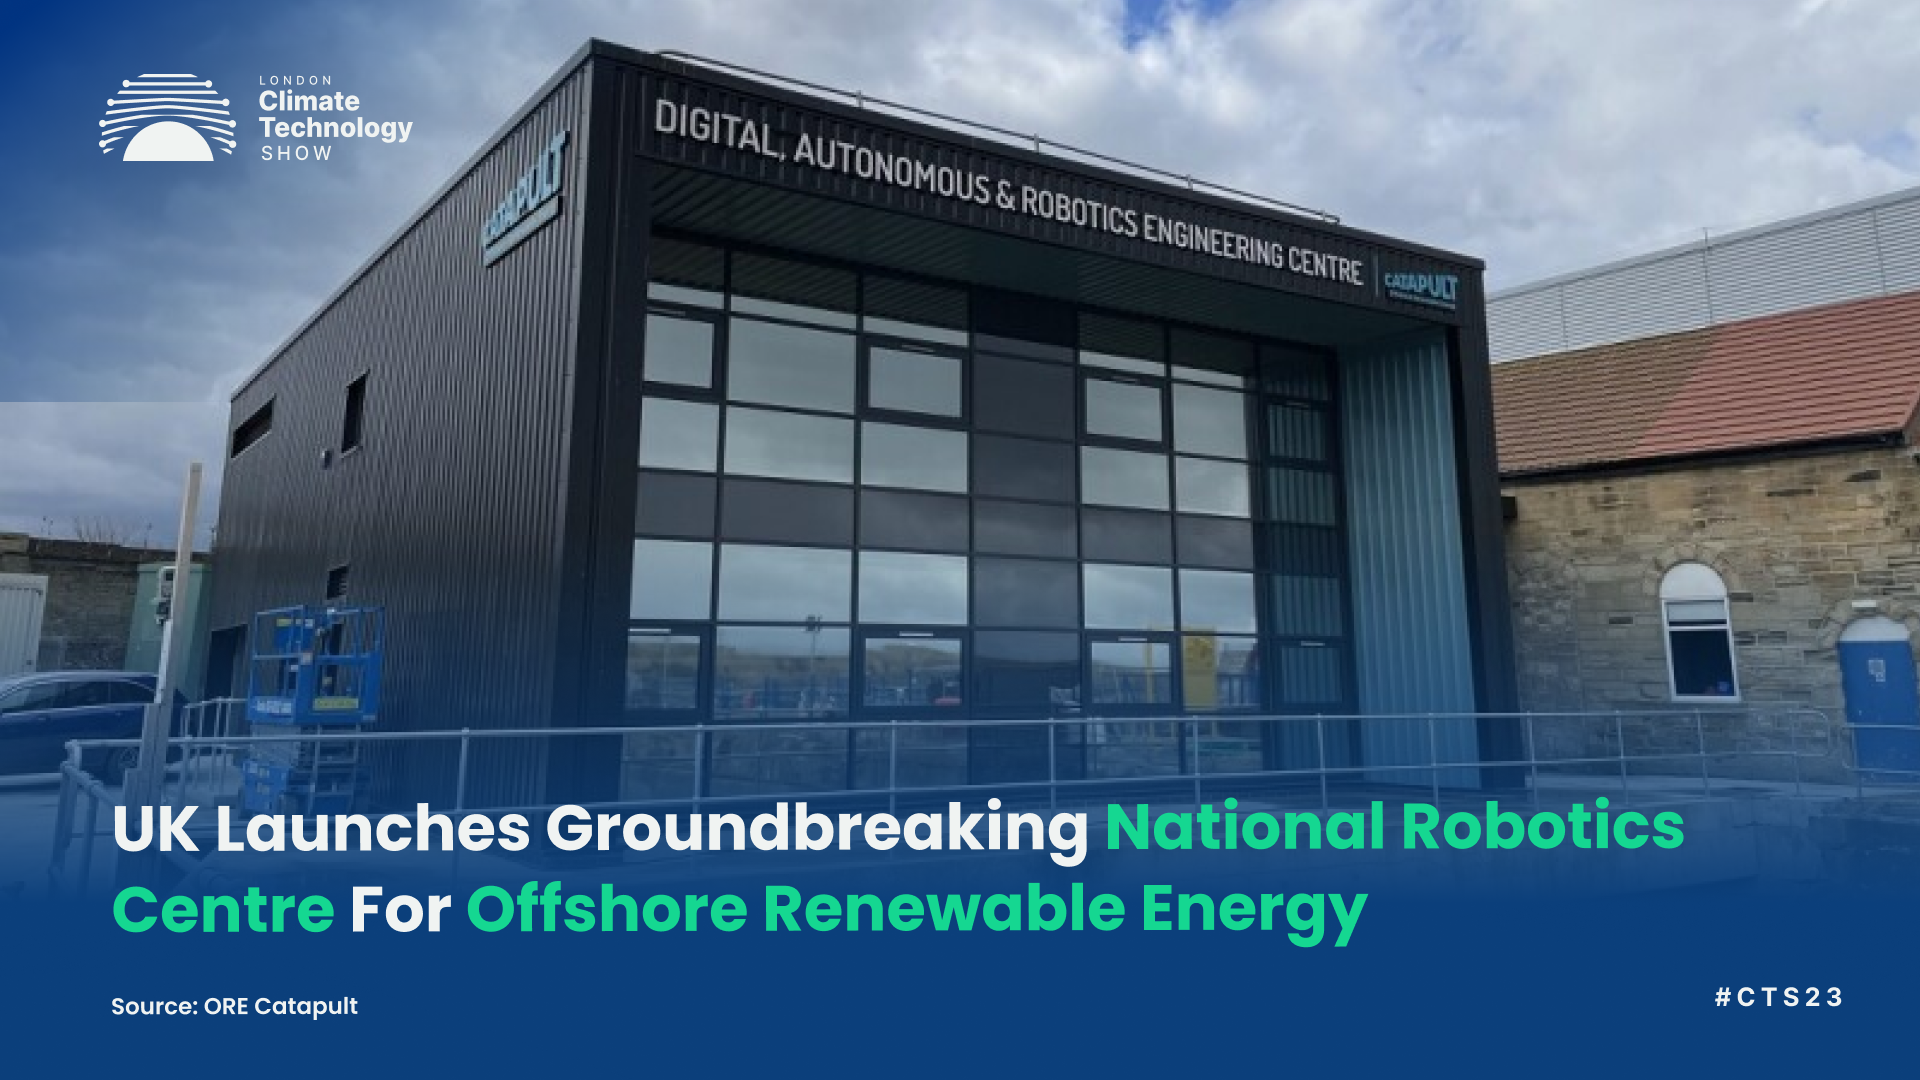 UK Launches Groundbreaking National Robotics Centre For Offshore Renewable Energy